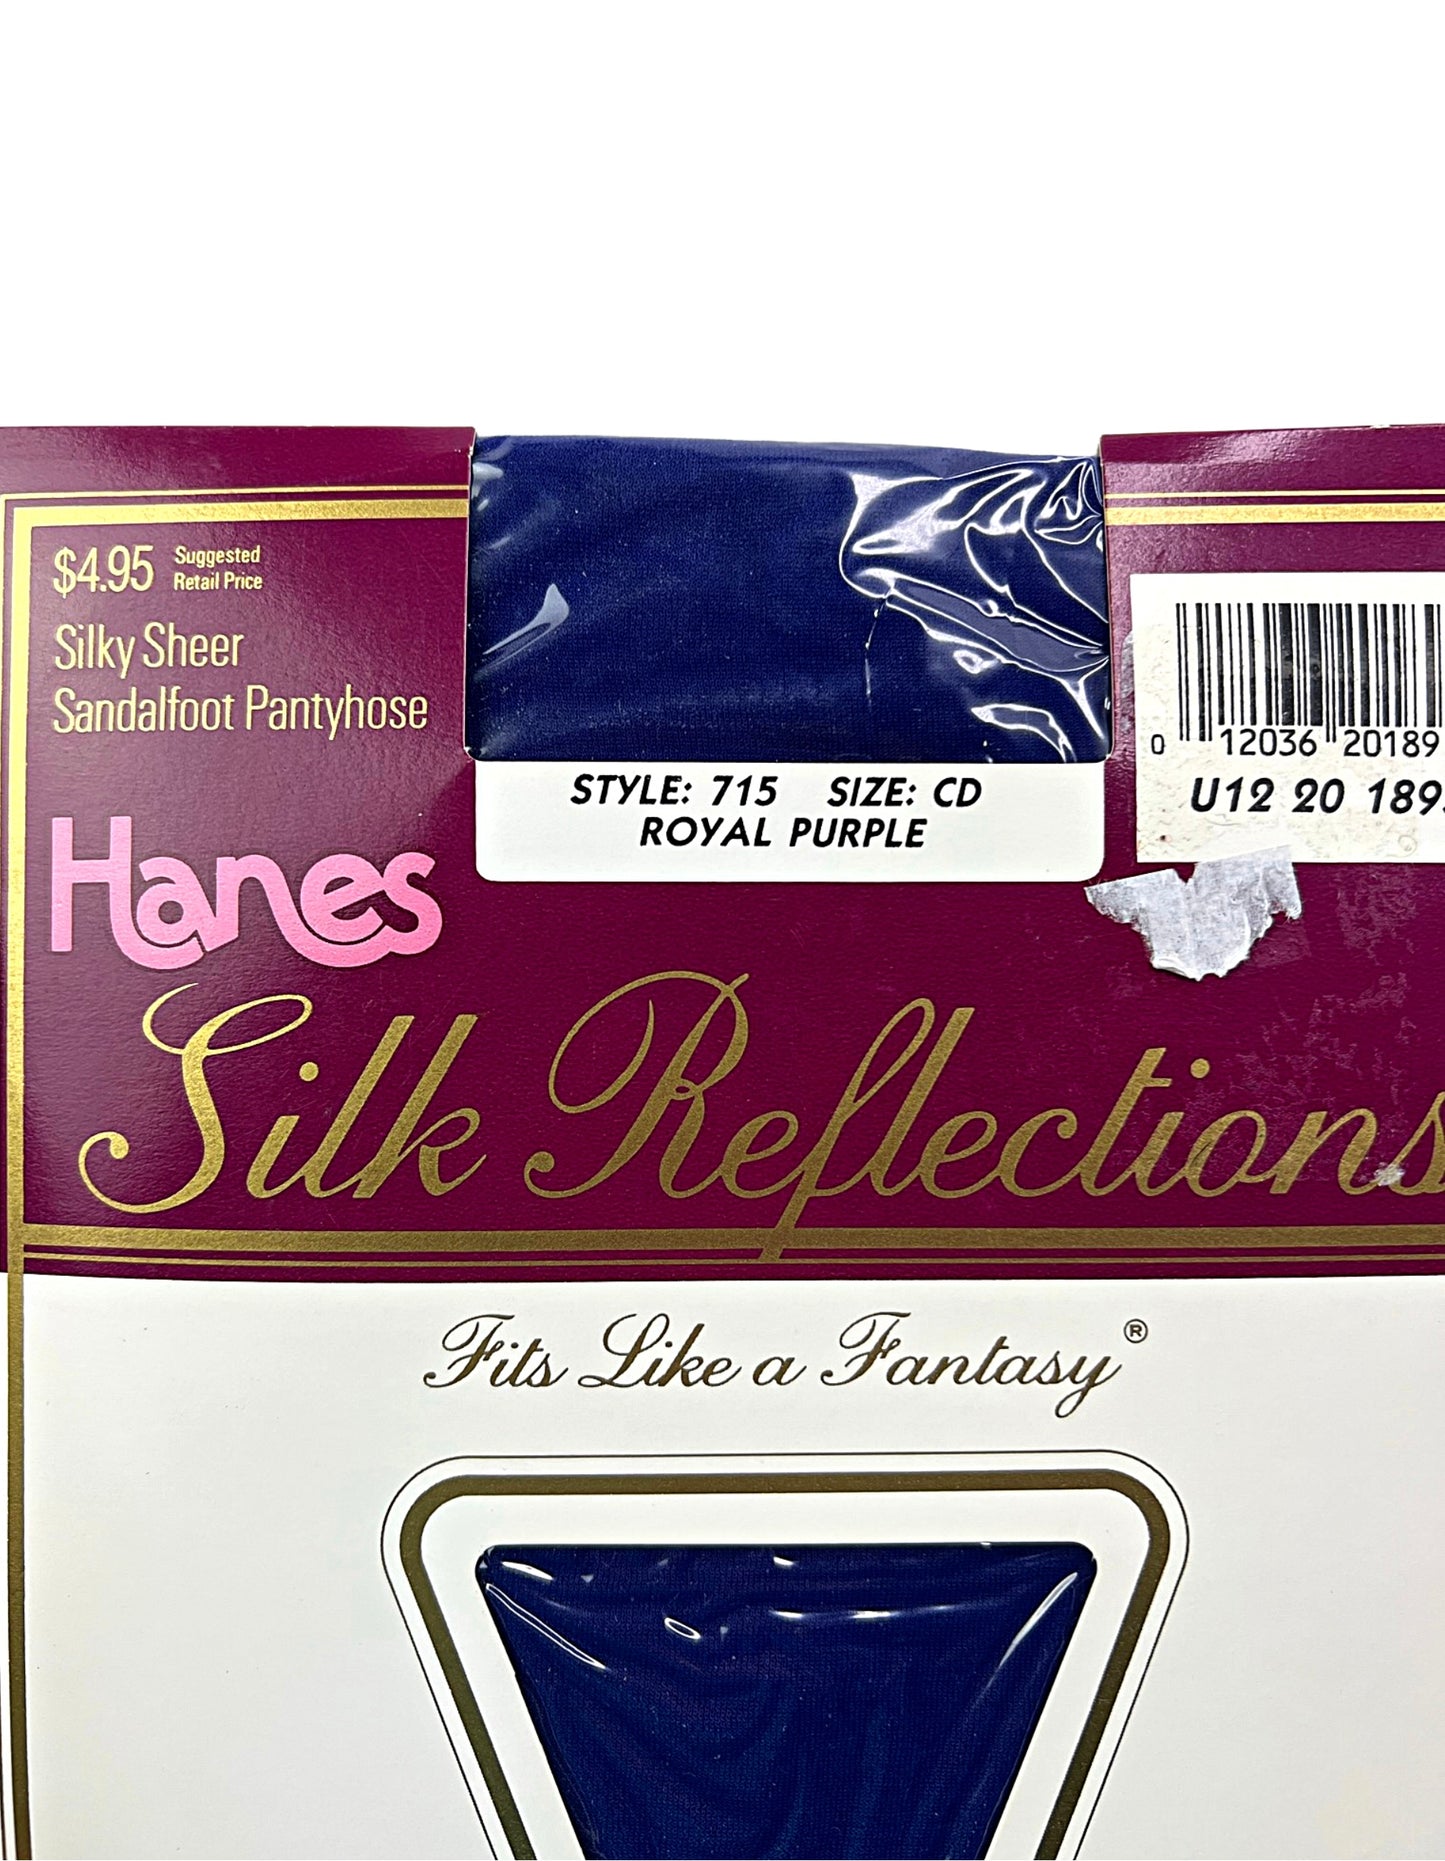 1989 Hane’s Silk Reflections Hosiery Pantyhose